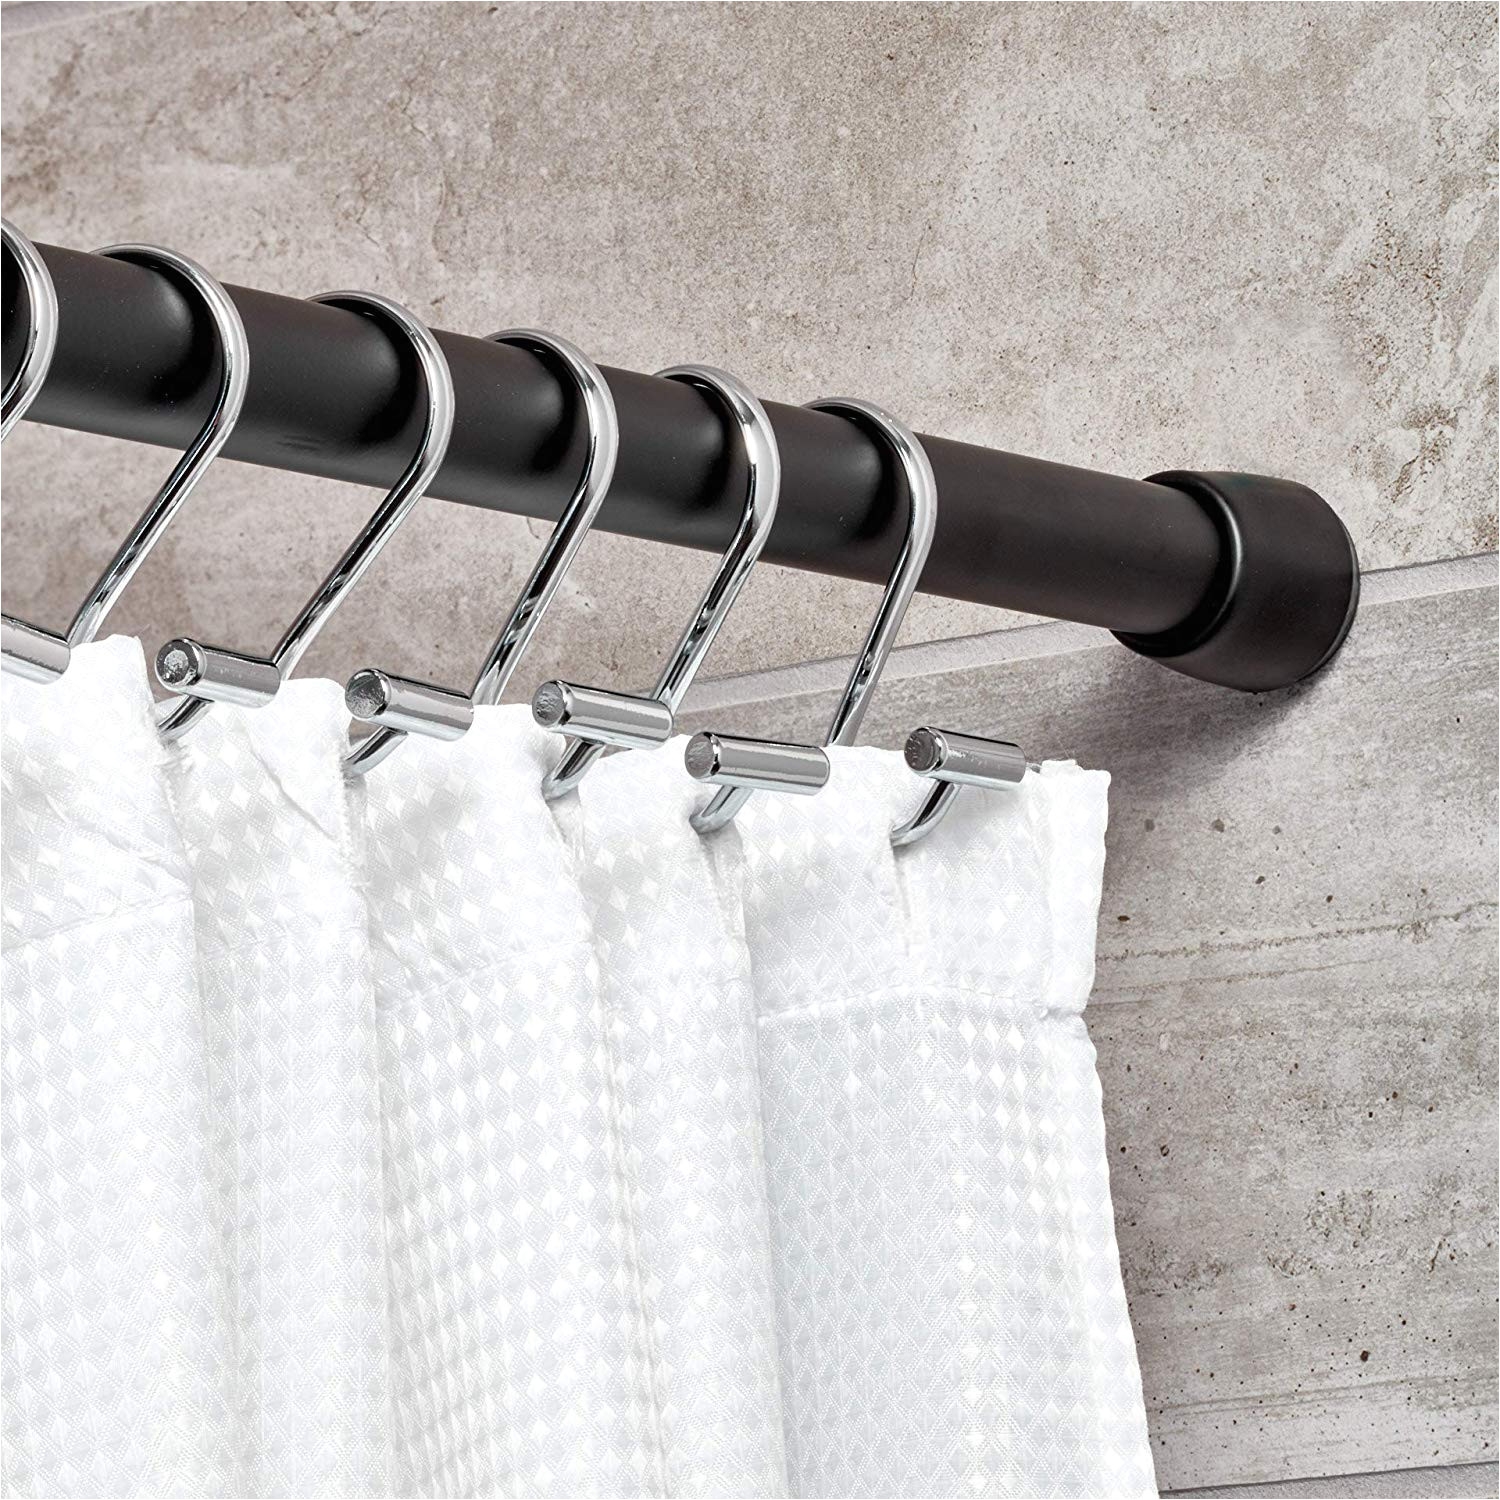 interdesign cameo constant tension bathroom shower curtain rod 43 75 medium matte black amazon ca home kitchen